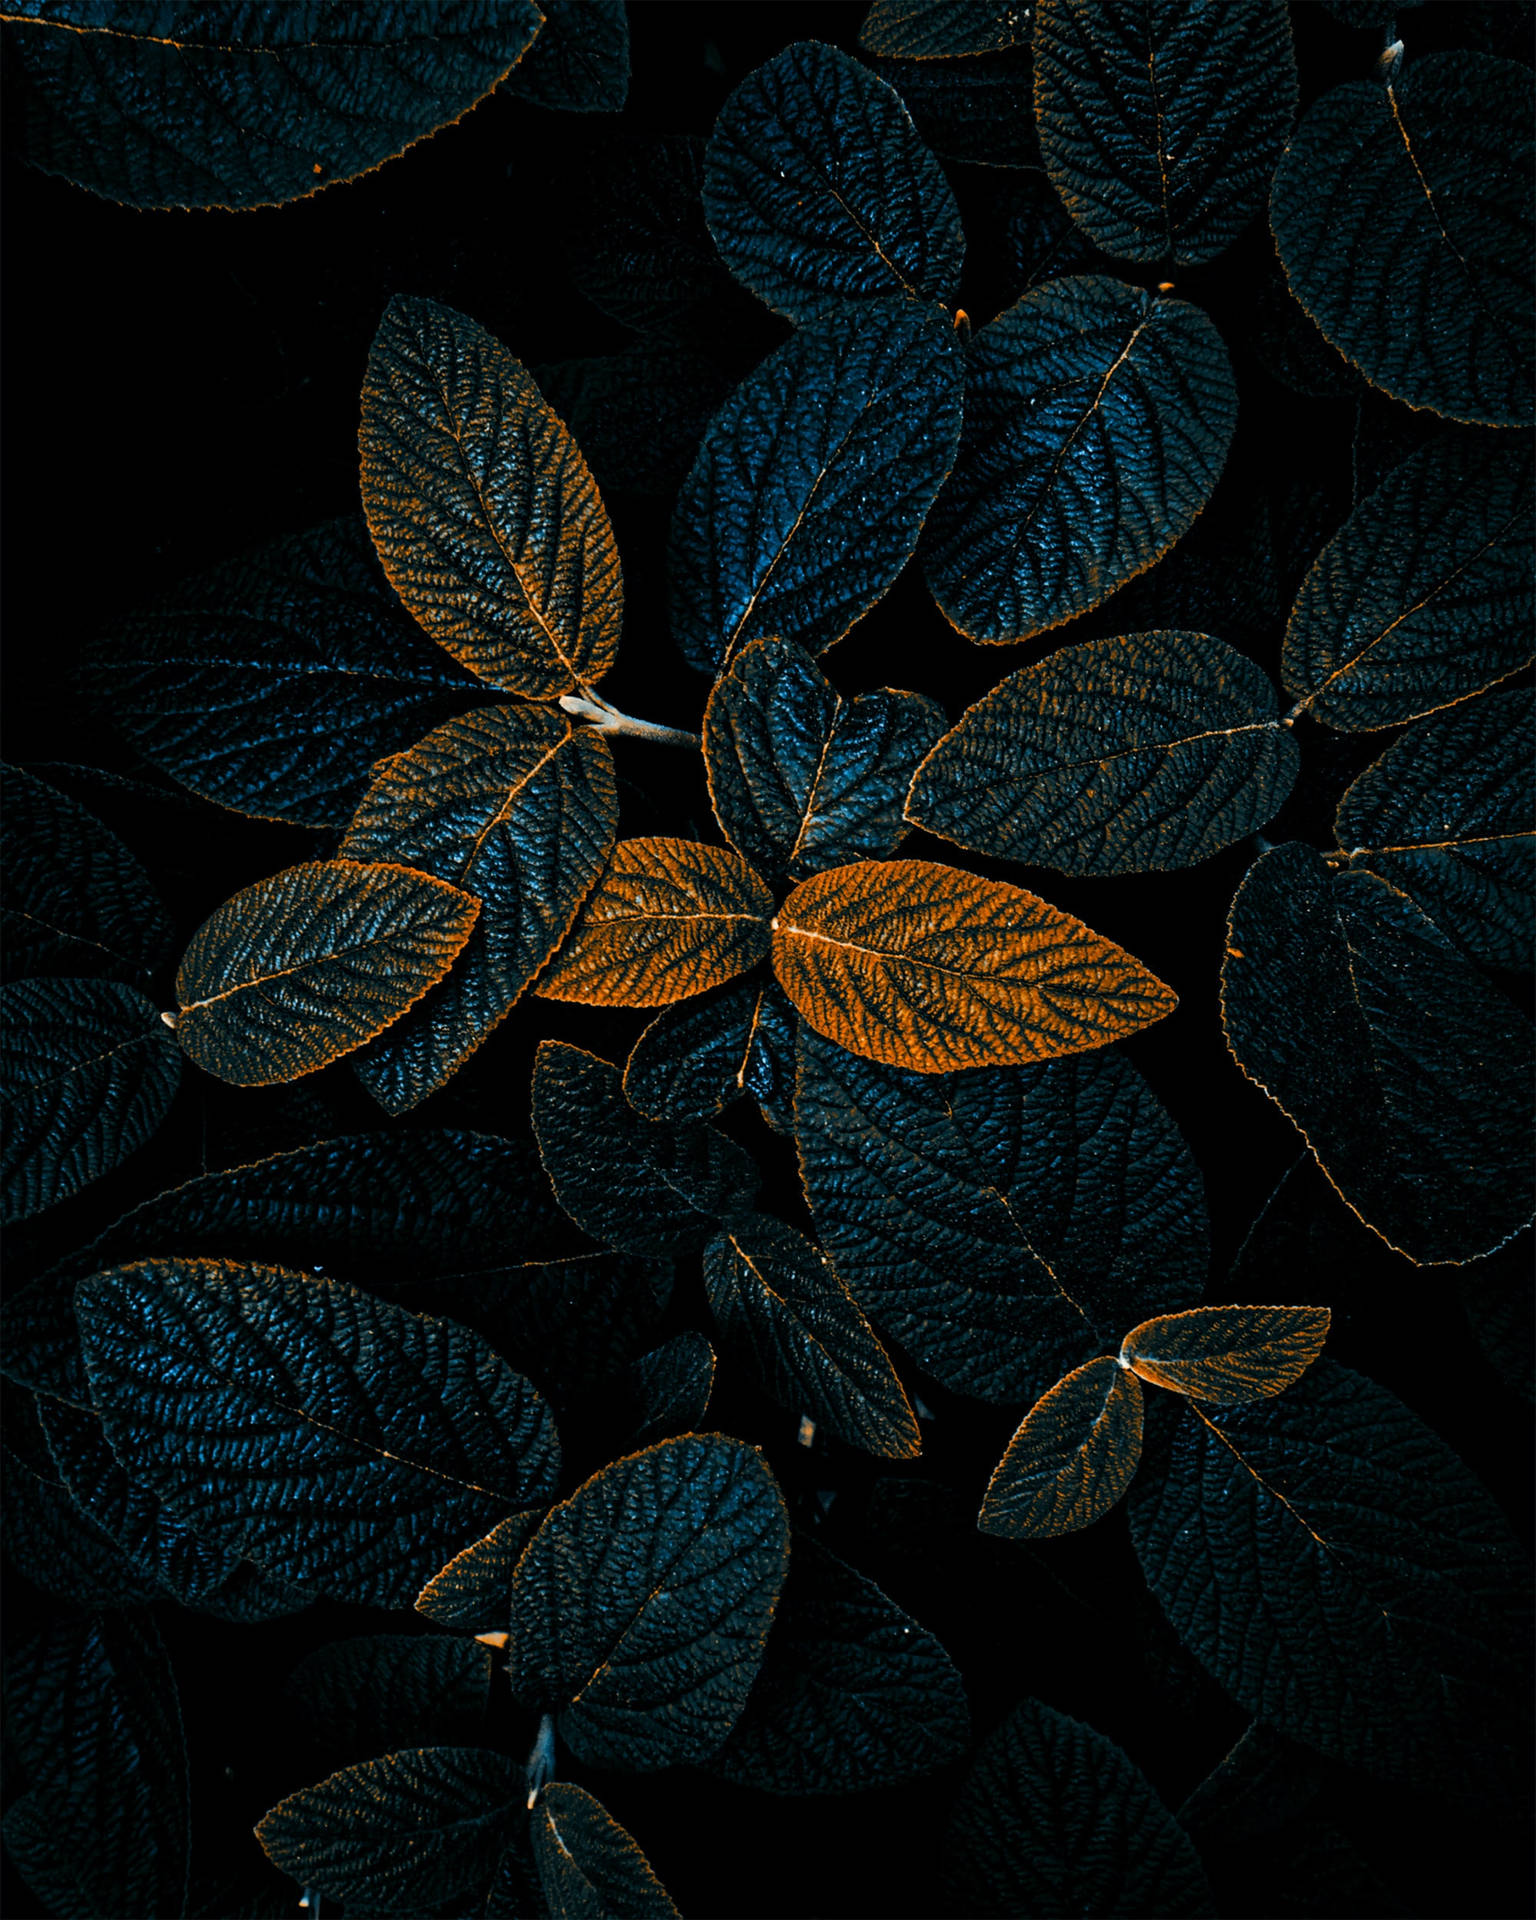 Dark Leaves Pictures  Download Free Images on Unsplash